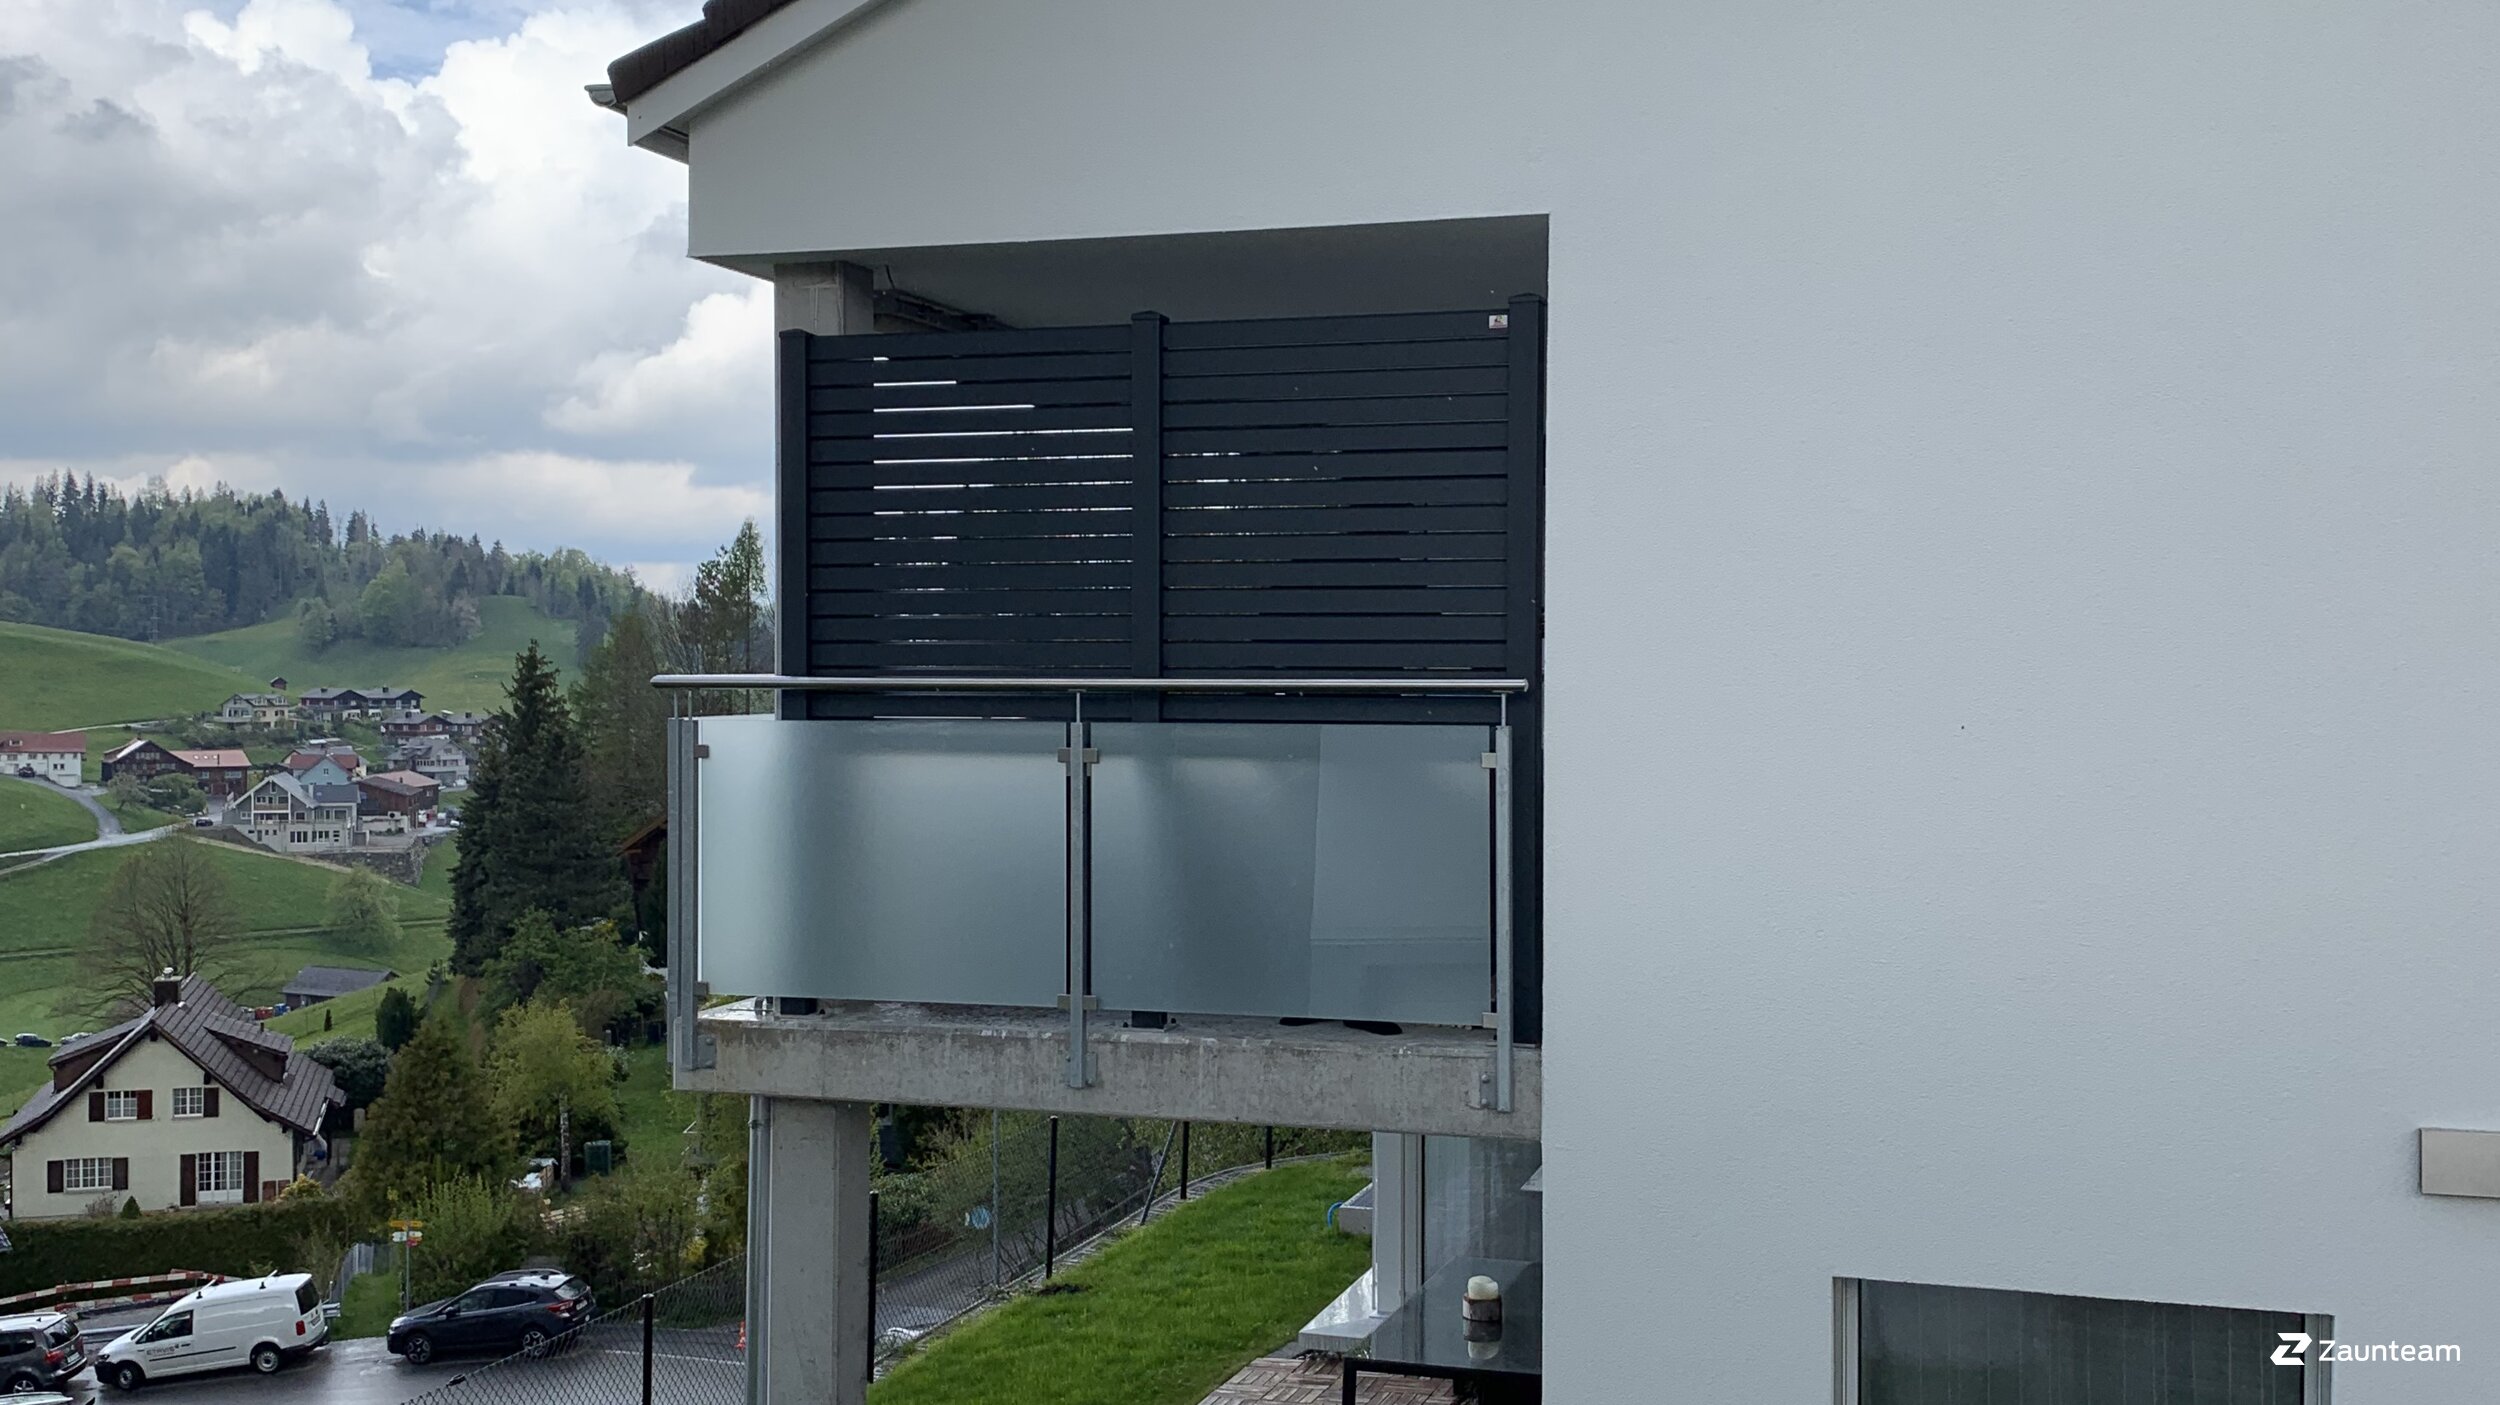 Protection brise-vue en aluminium de 2019 à 9103 Schwellbrunn Suisse de Zaunteam Appenzellerland.